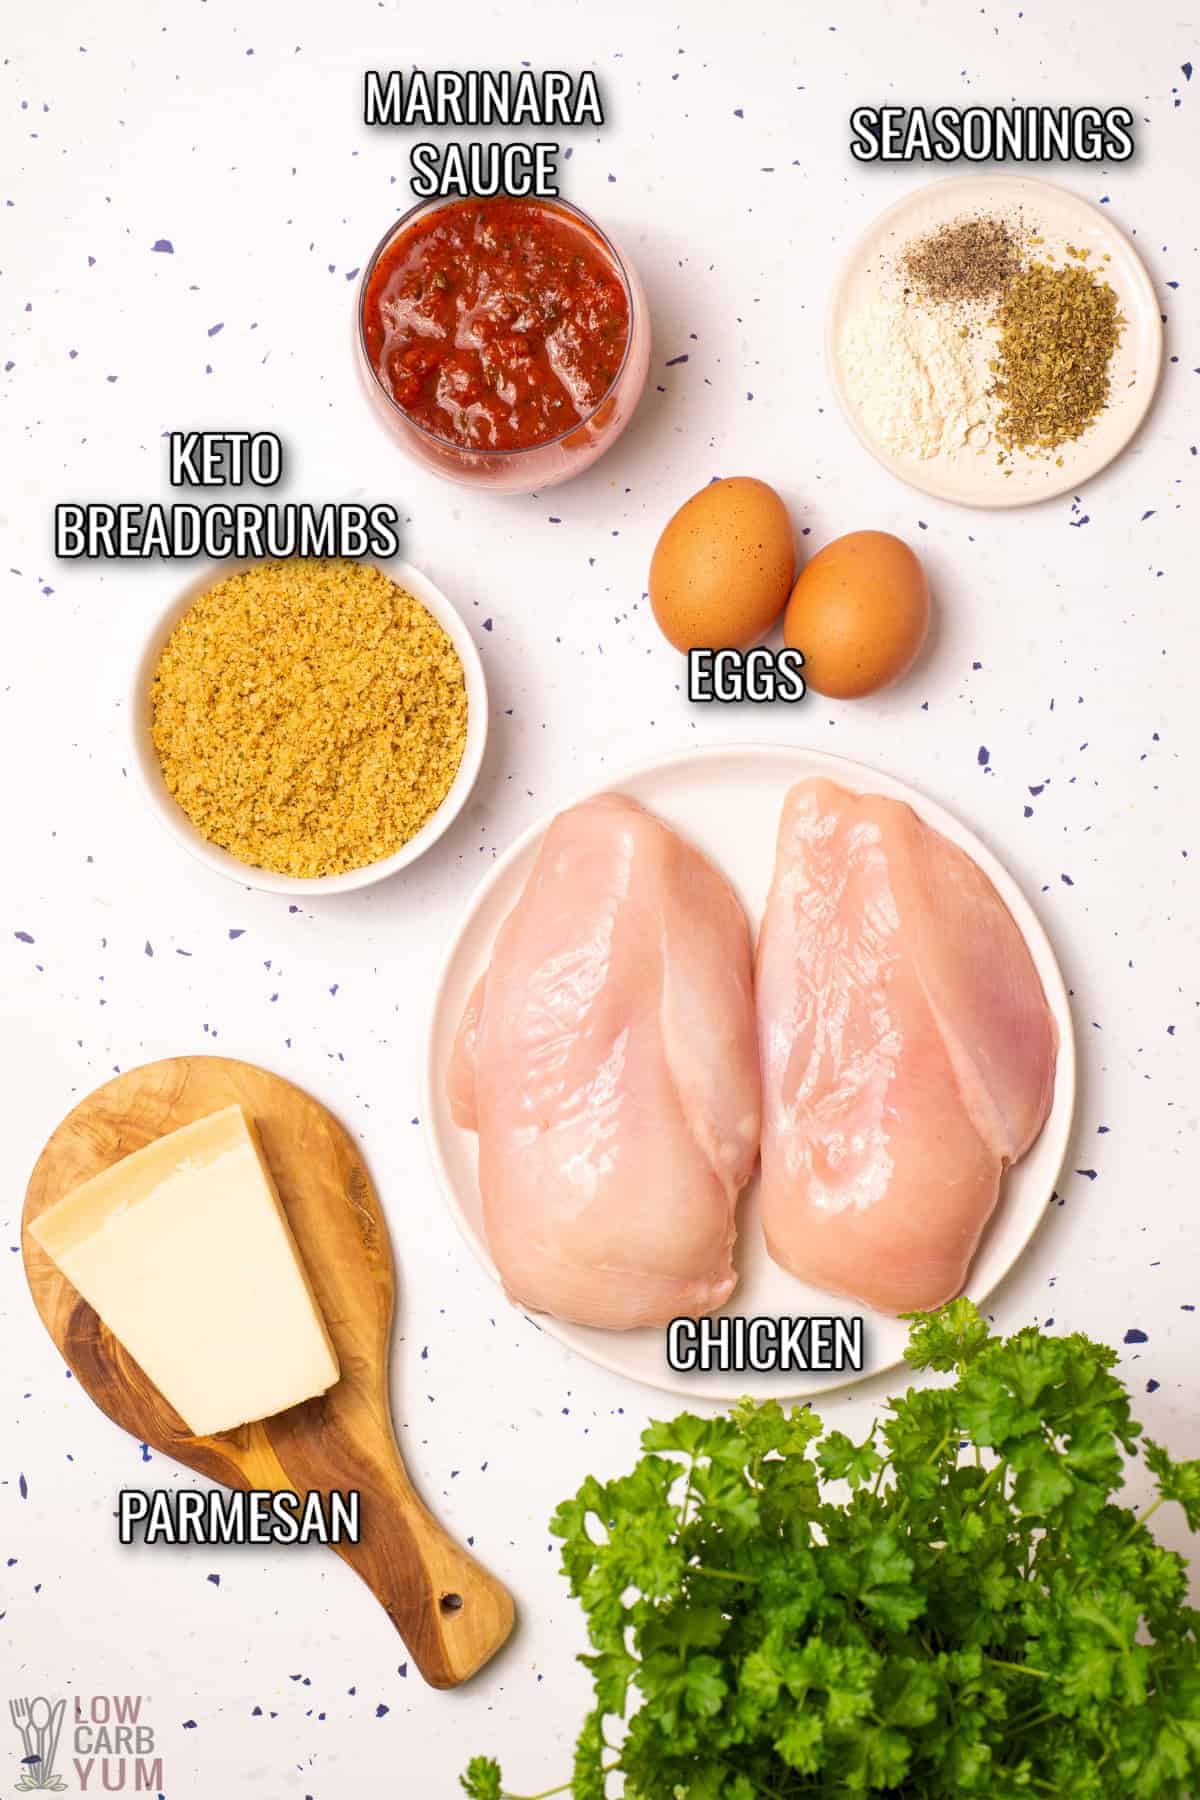 ingredients for keto chicken parmesan recipel.